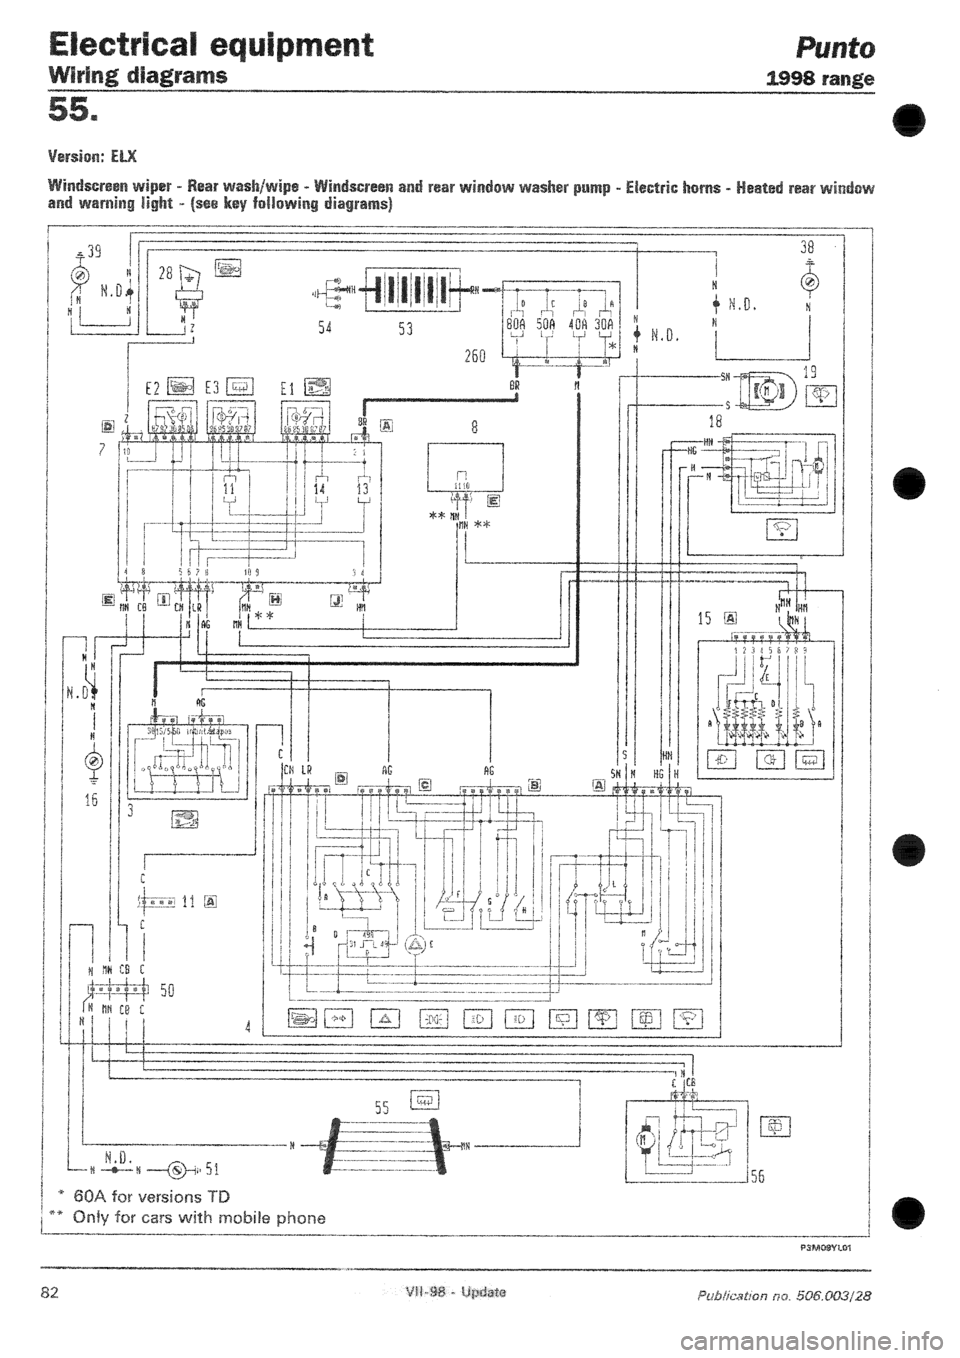 FIAT PUNTO 1998 176 / 1.G Wiring Diagrams User Guide 